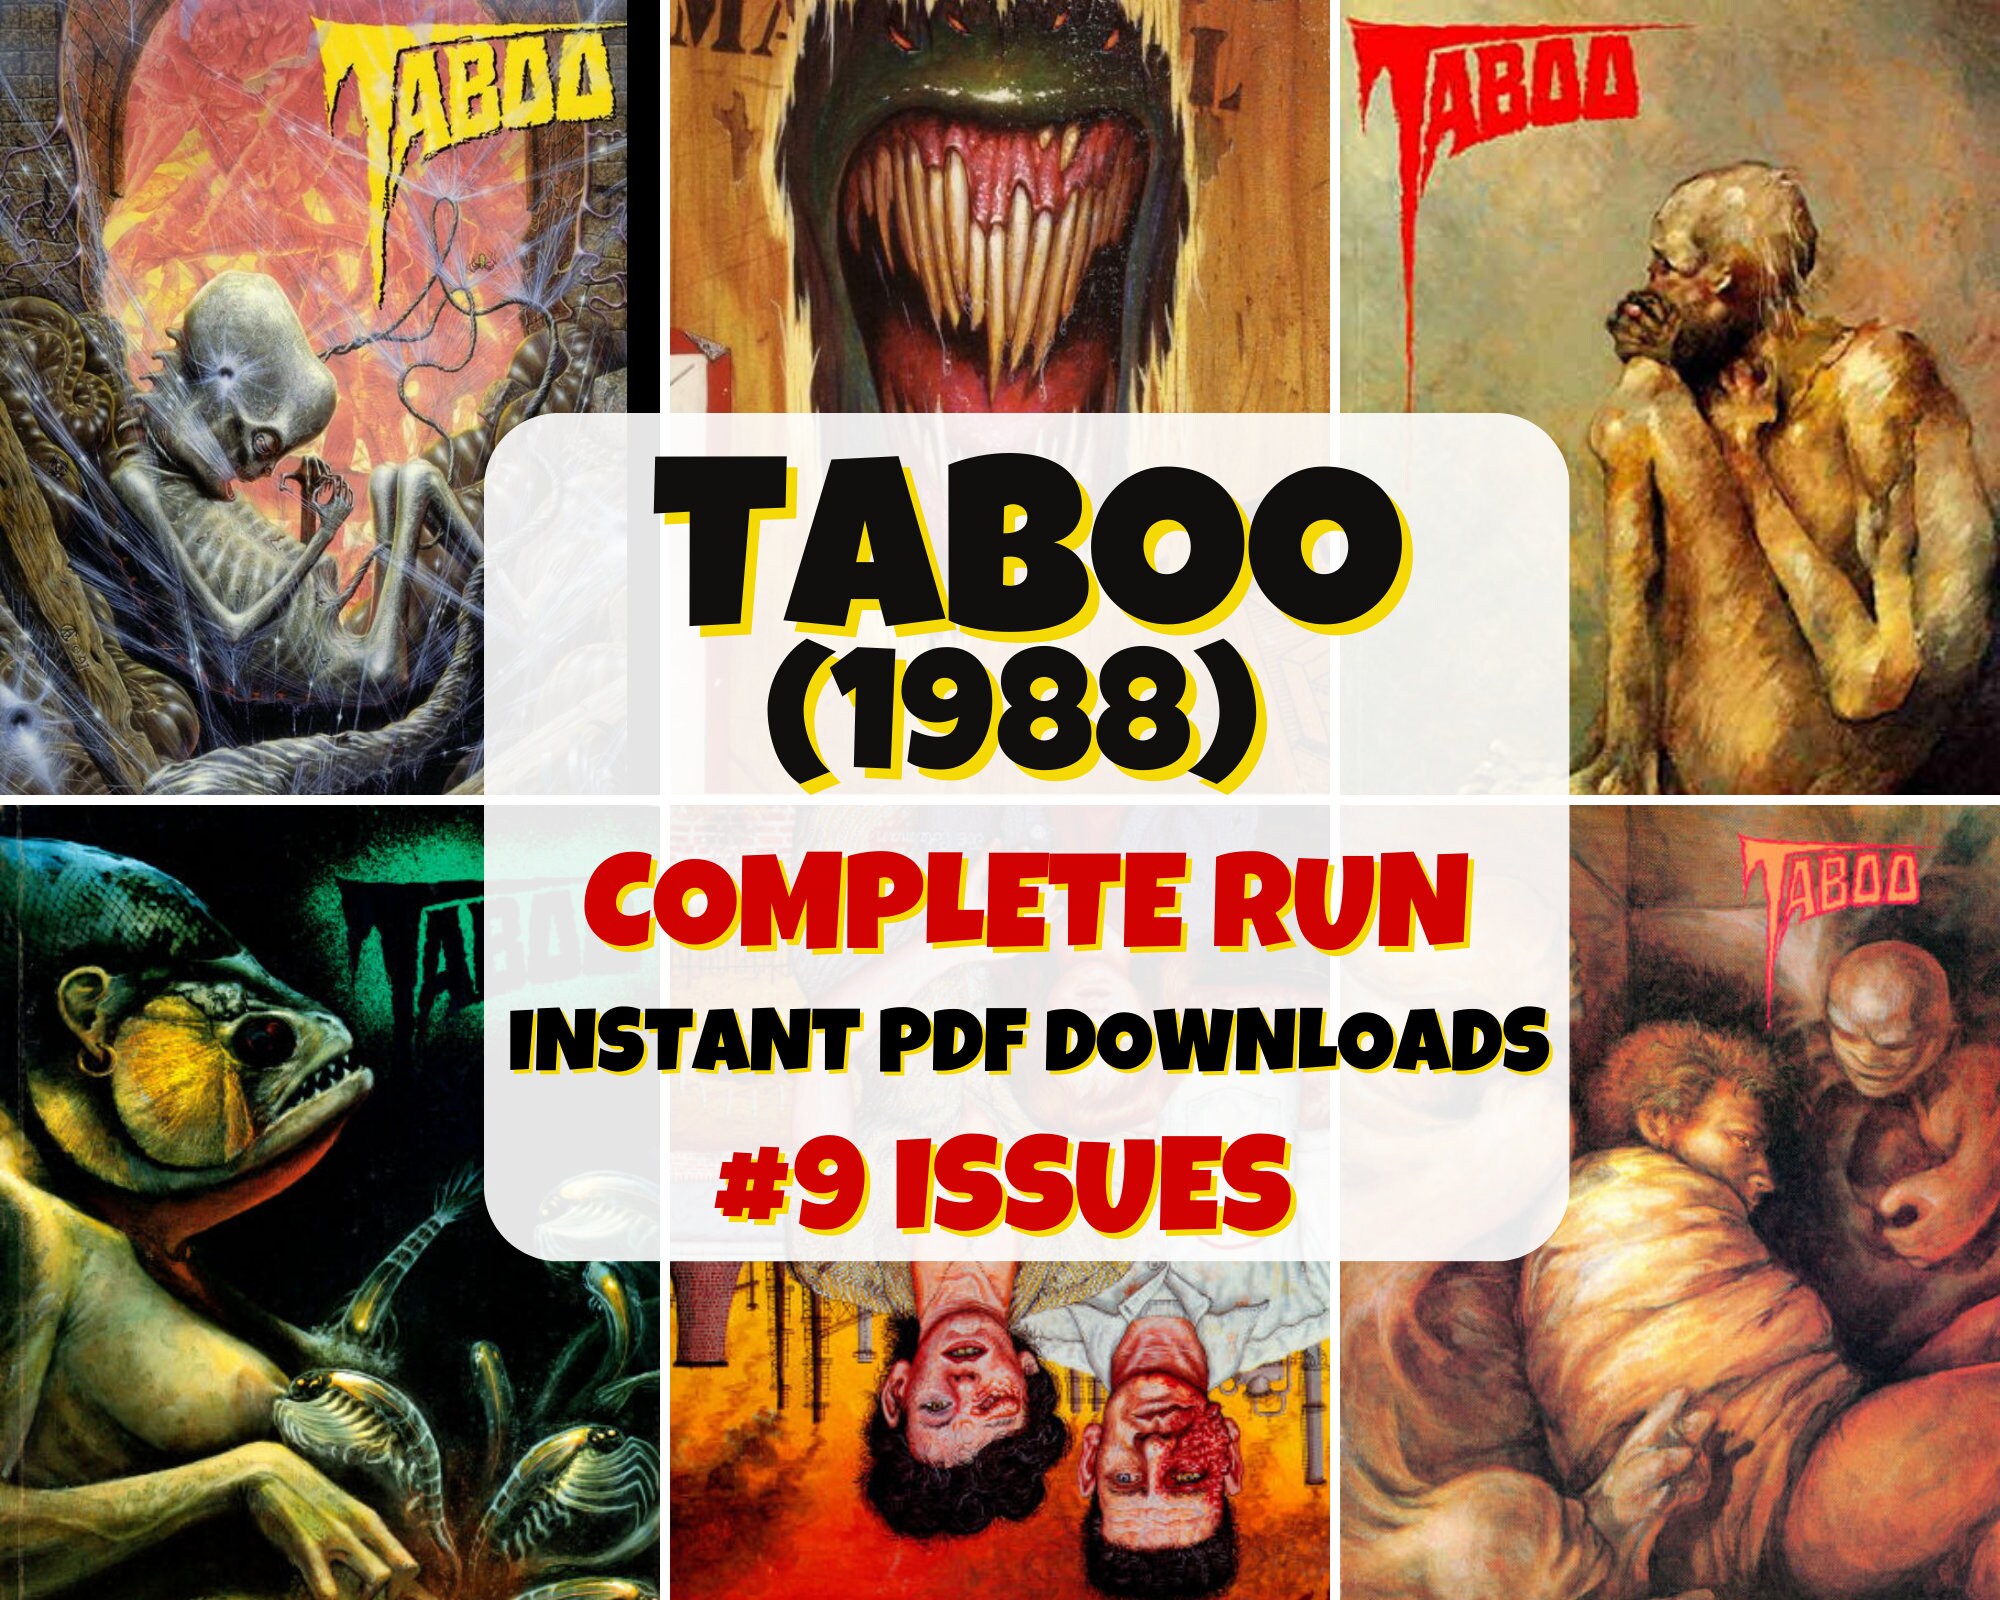 Taboo family comics